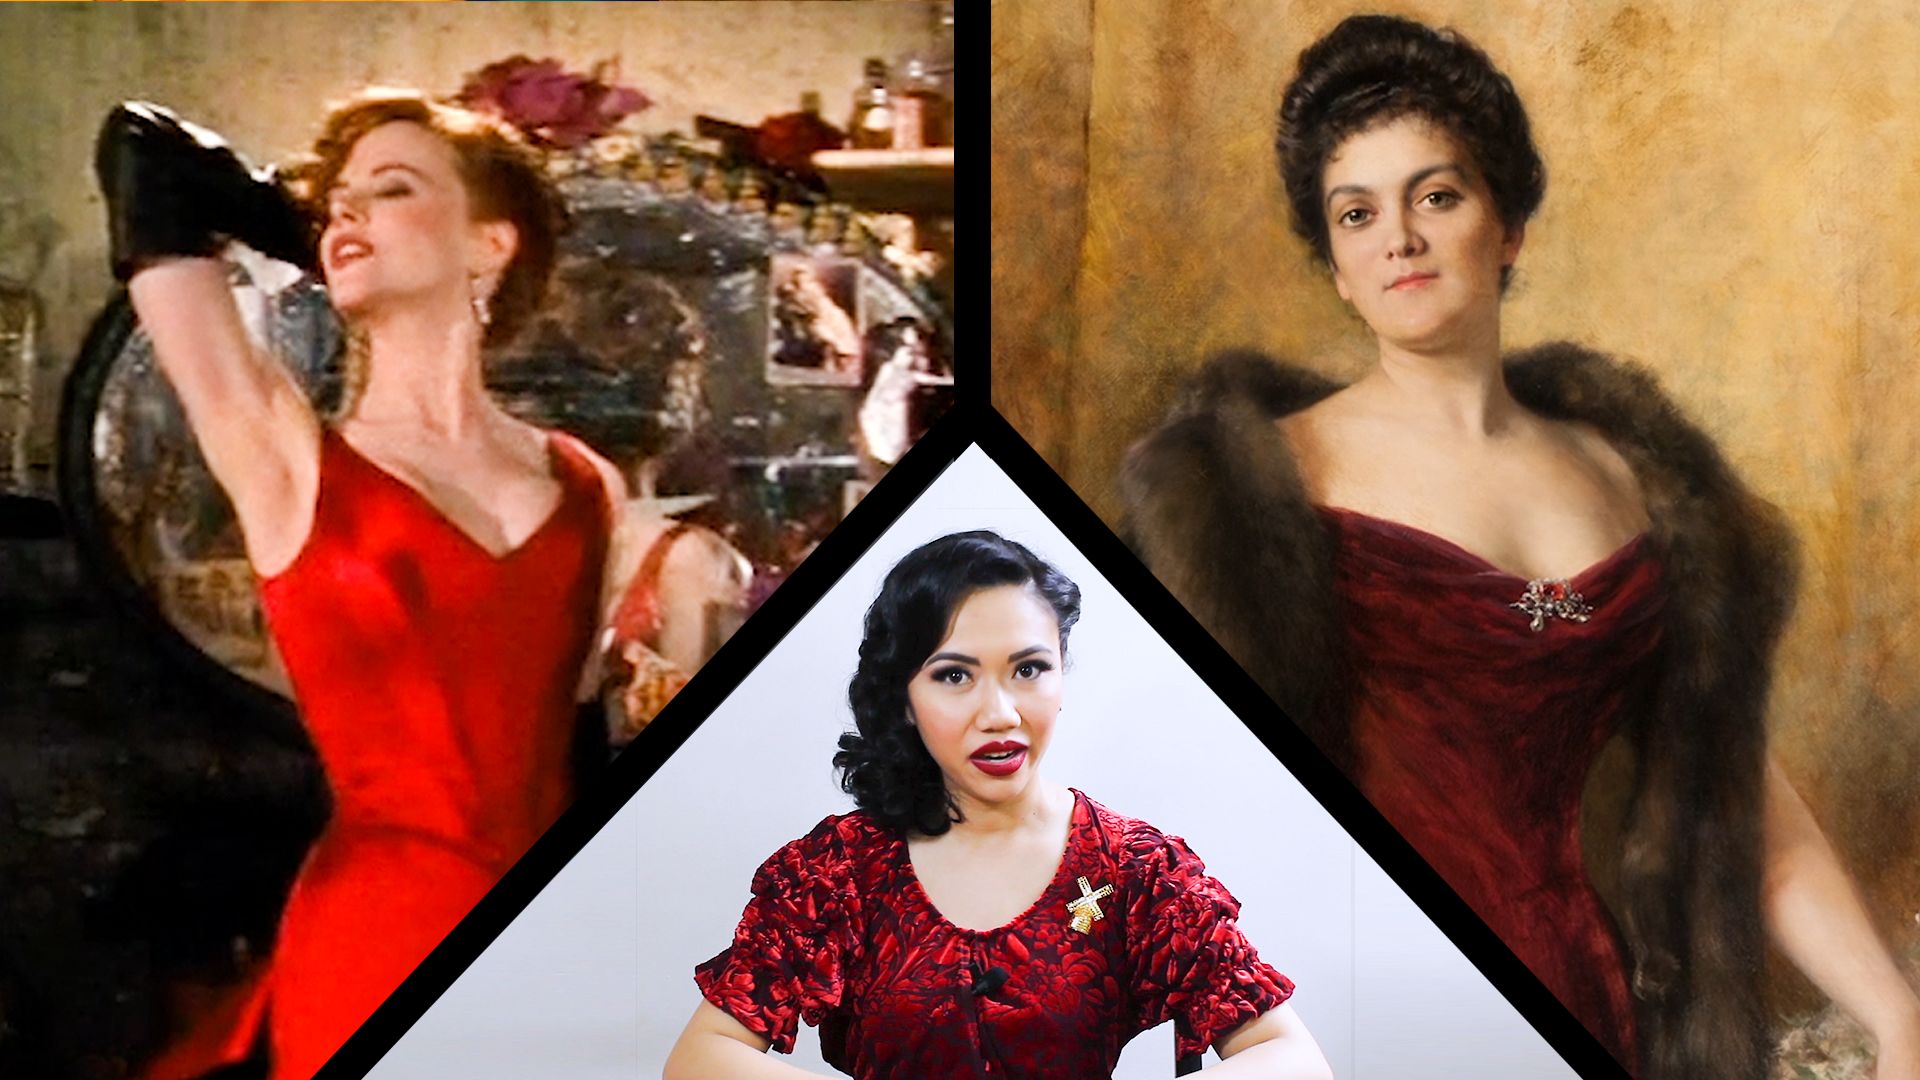 Watch Fashion Expert Fact Checks Moulin Rouge's Wardrobe   Would ...